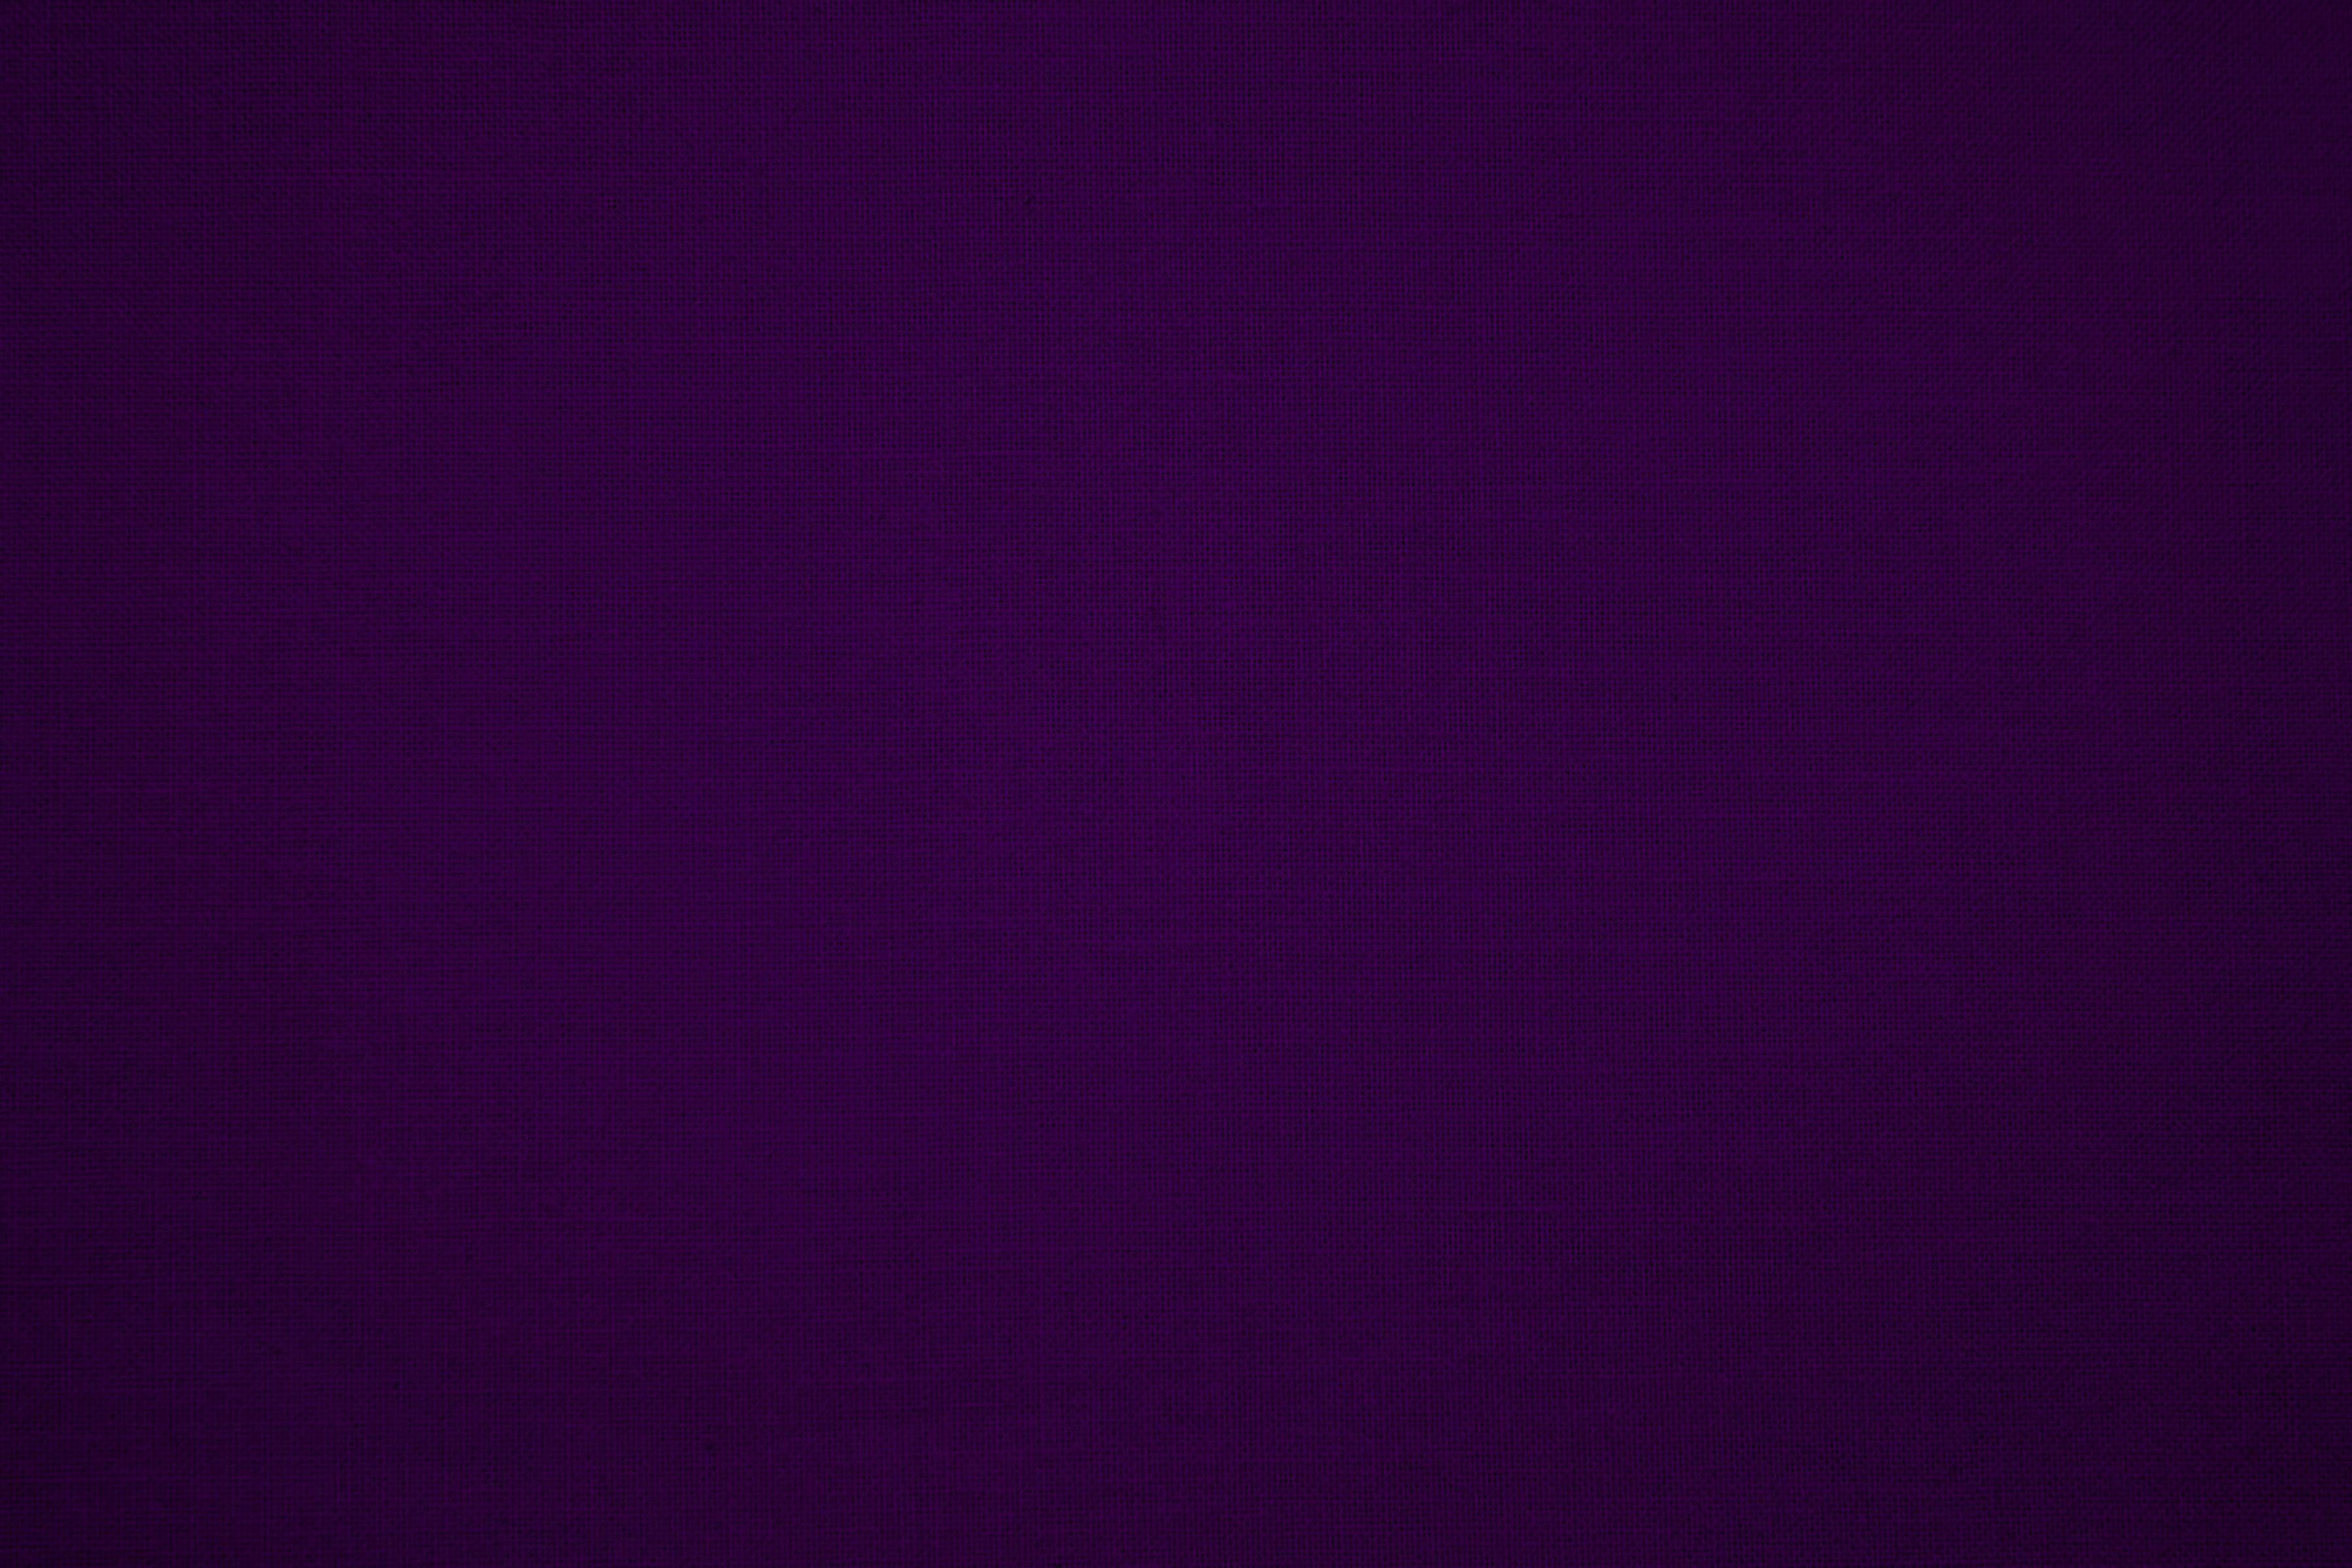 plain purple background